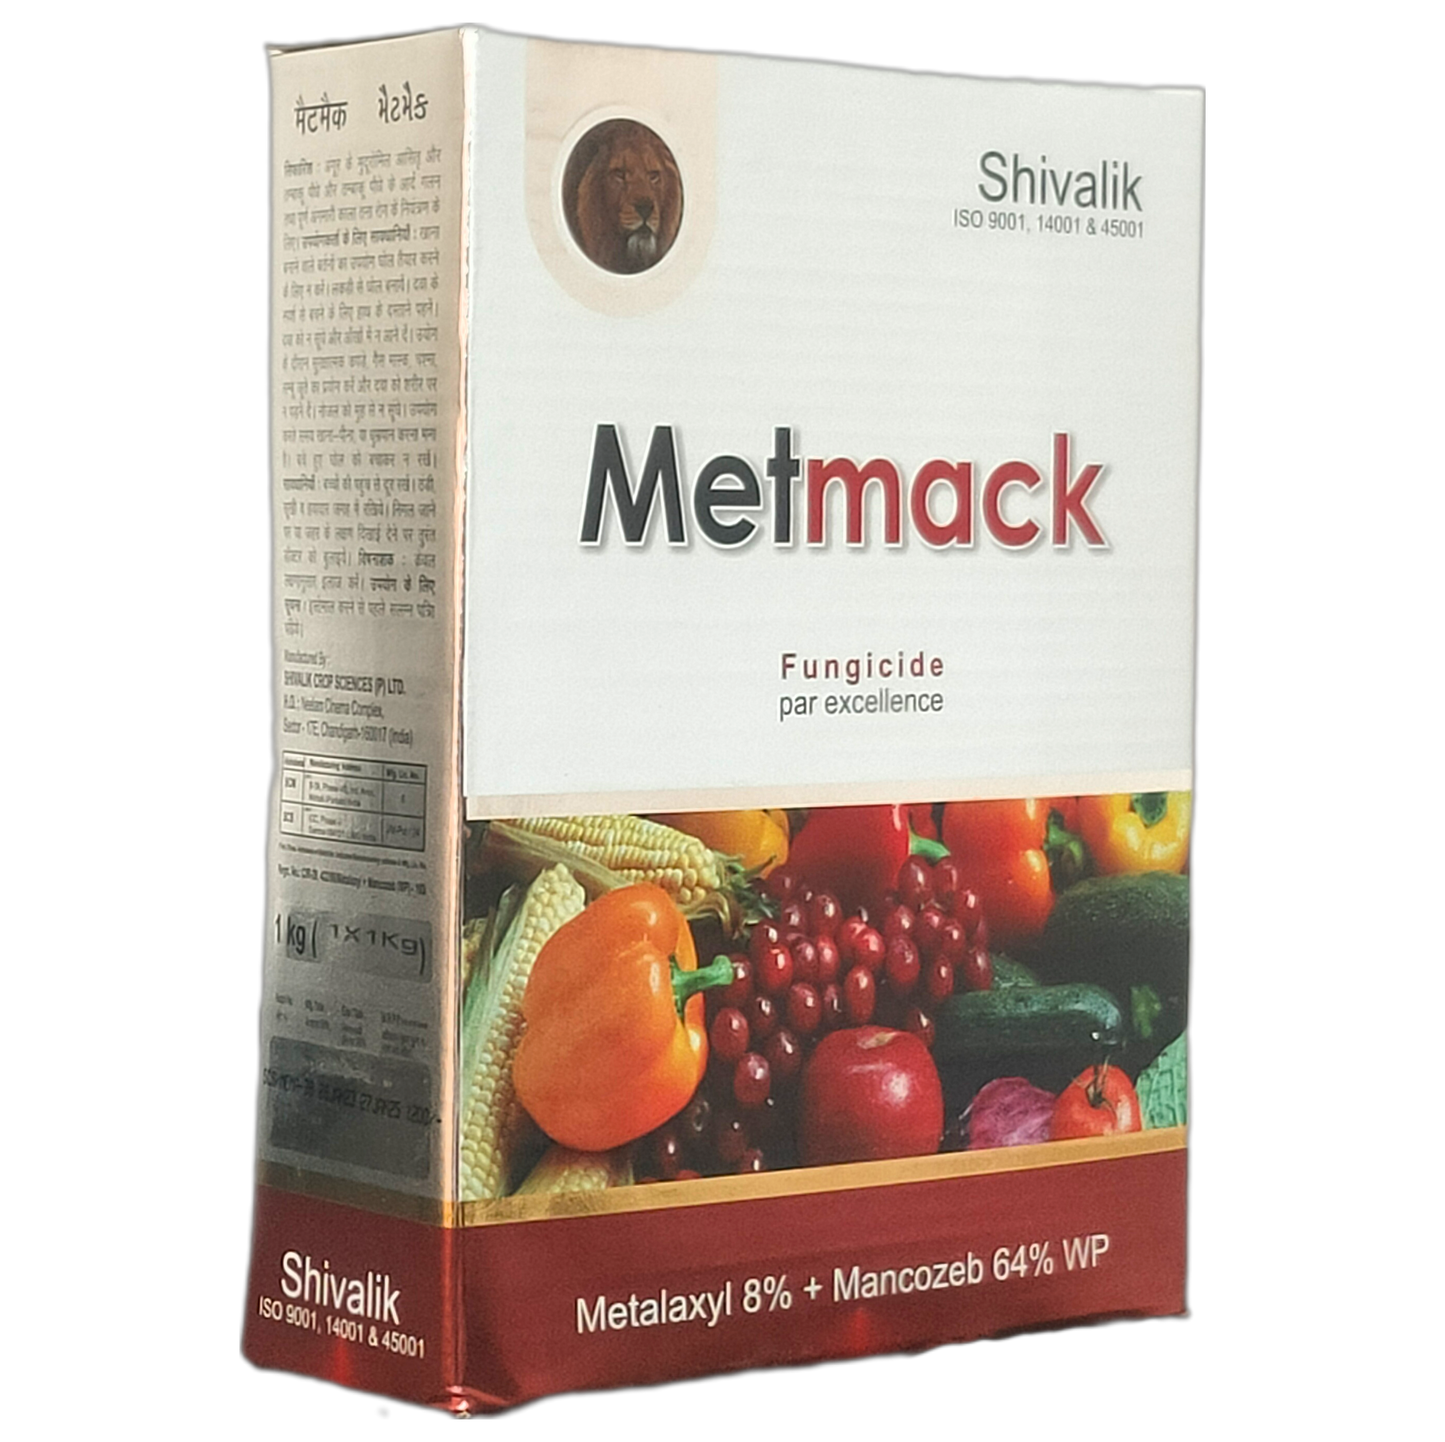 Metmack - Metalaxyl 8% + Mancozeb 64% WP Fungicide